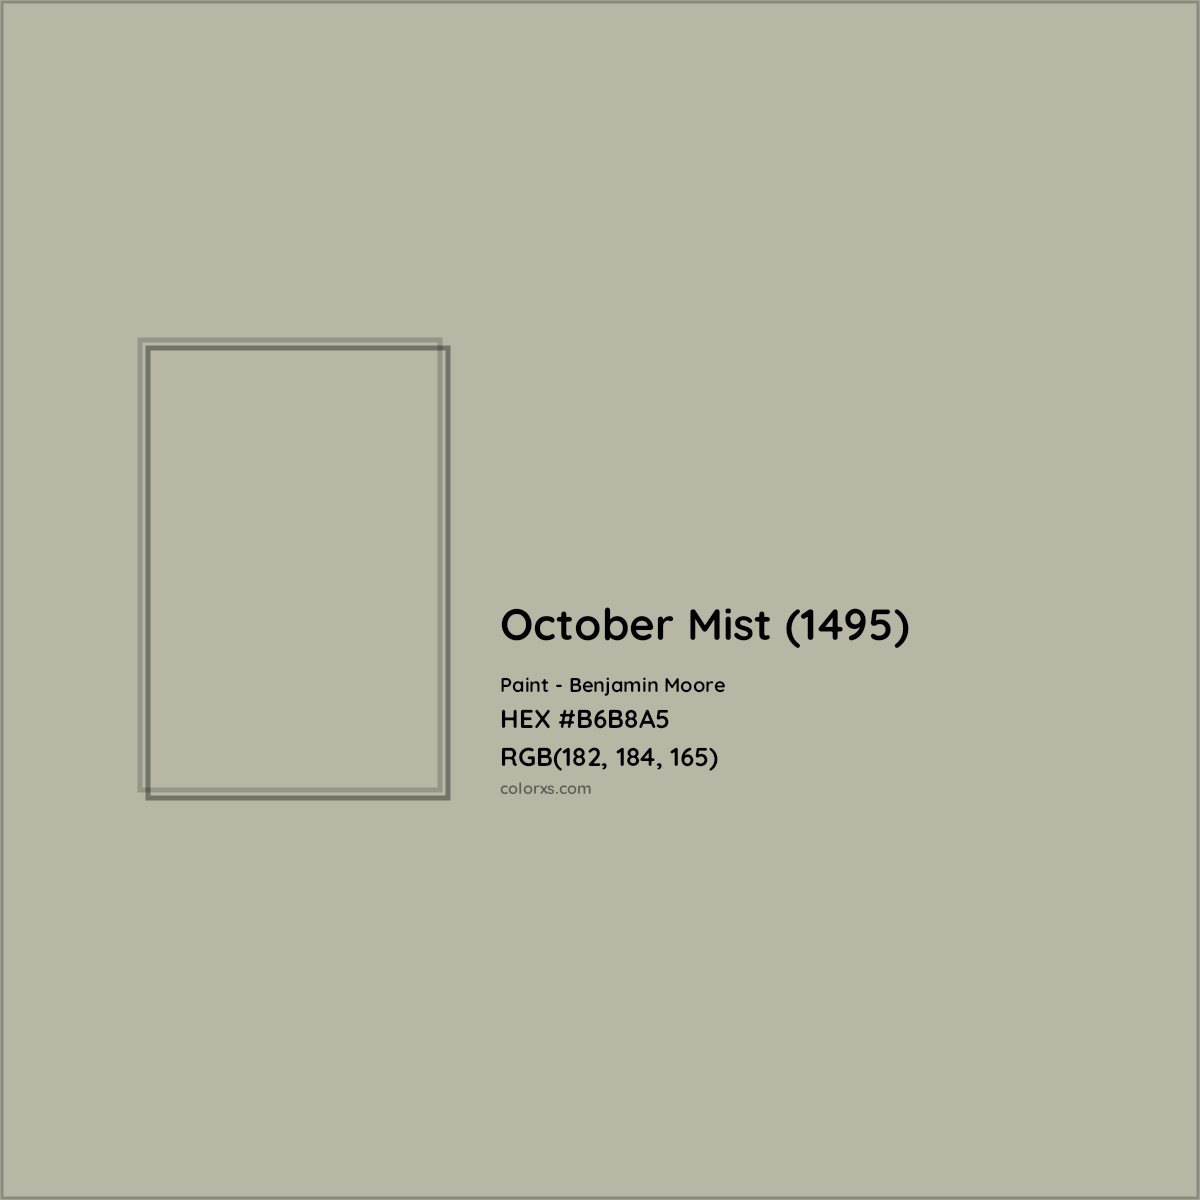 HEX #B6B8A5 October Mist (1495) Paint Benjamin Moore - Color Code